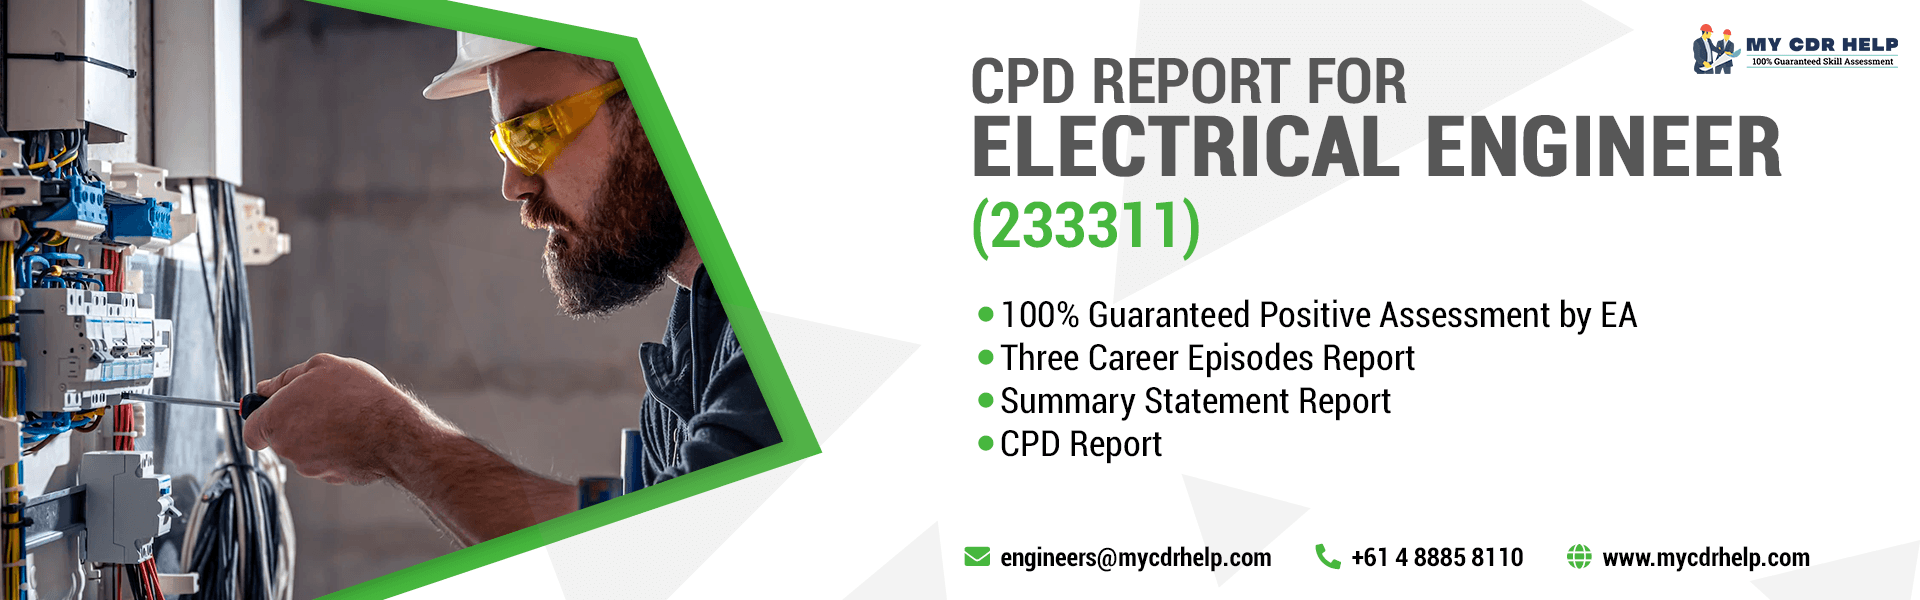 Electrical Engineer CDR report